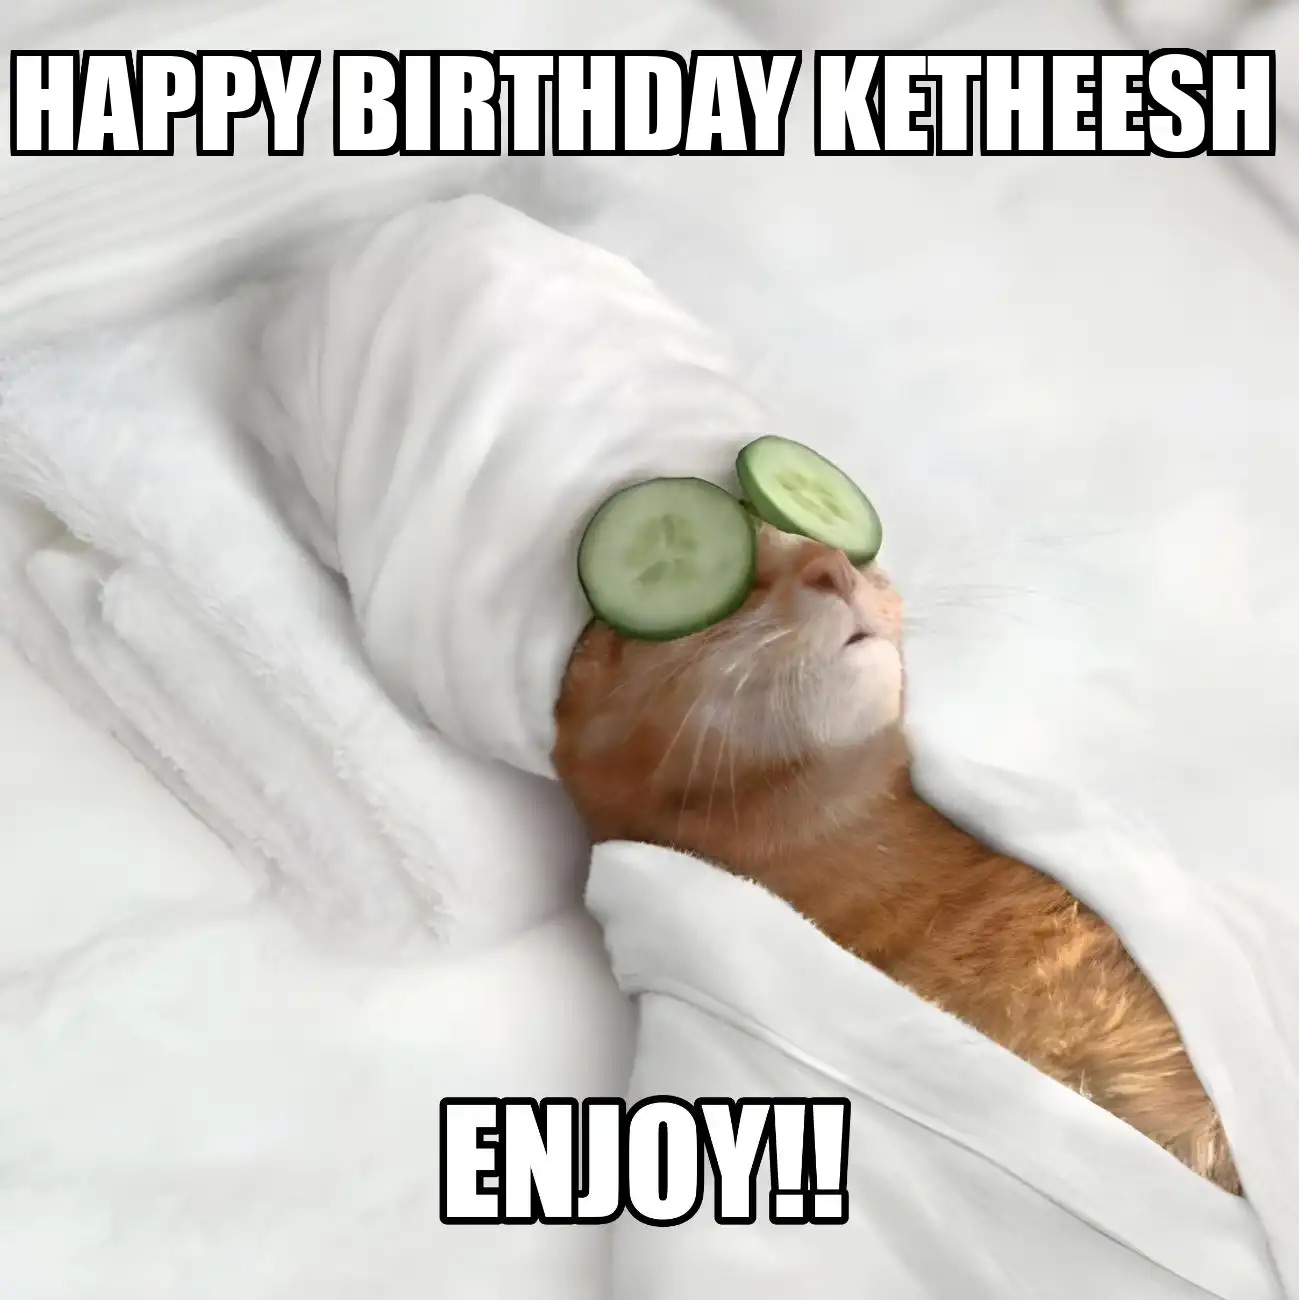 Happy Birthday Ketheesh Enjoy Cat Meme